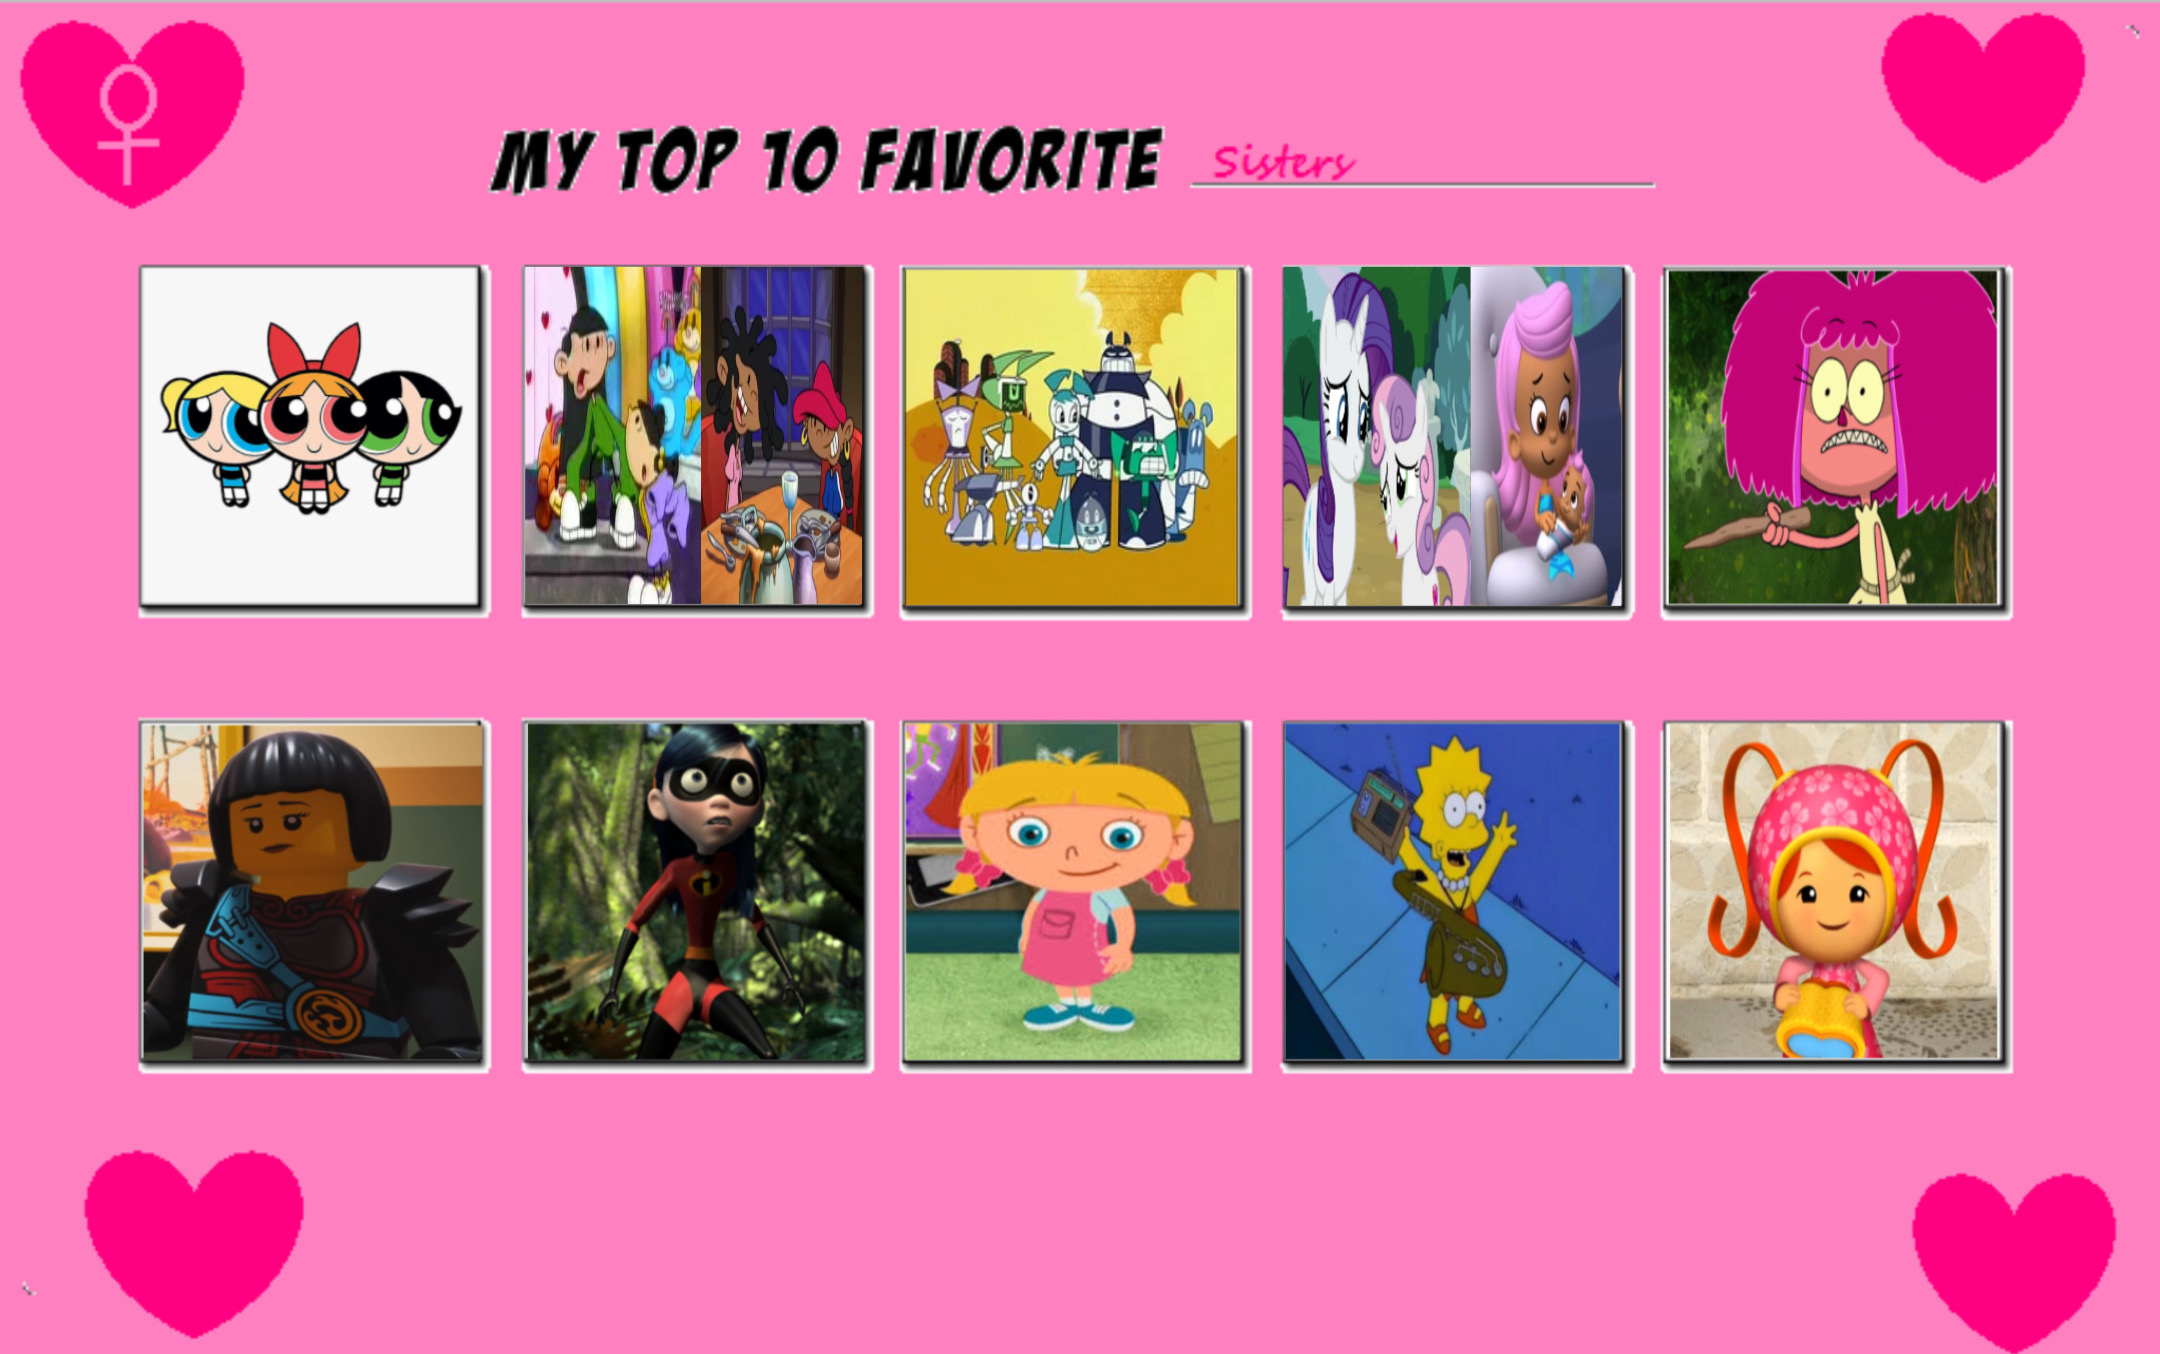 Top 10 Favourite Cartoon Network Shows by GeoNonnyJenny on DeviantArt